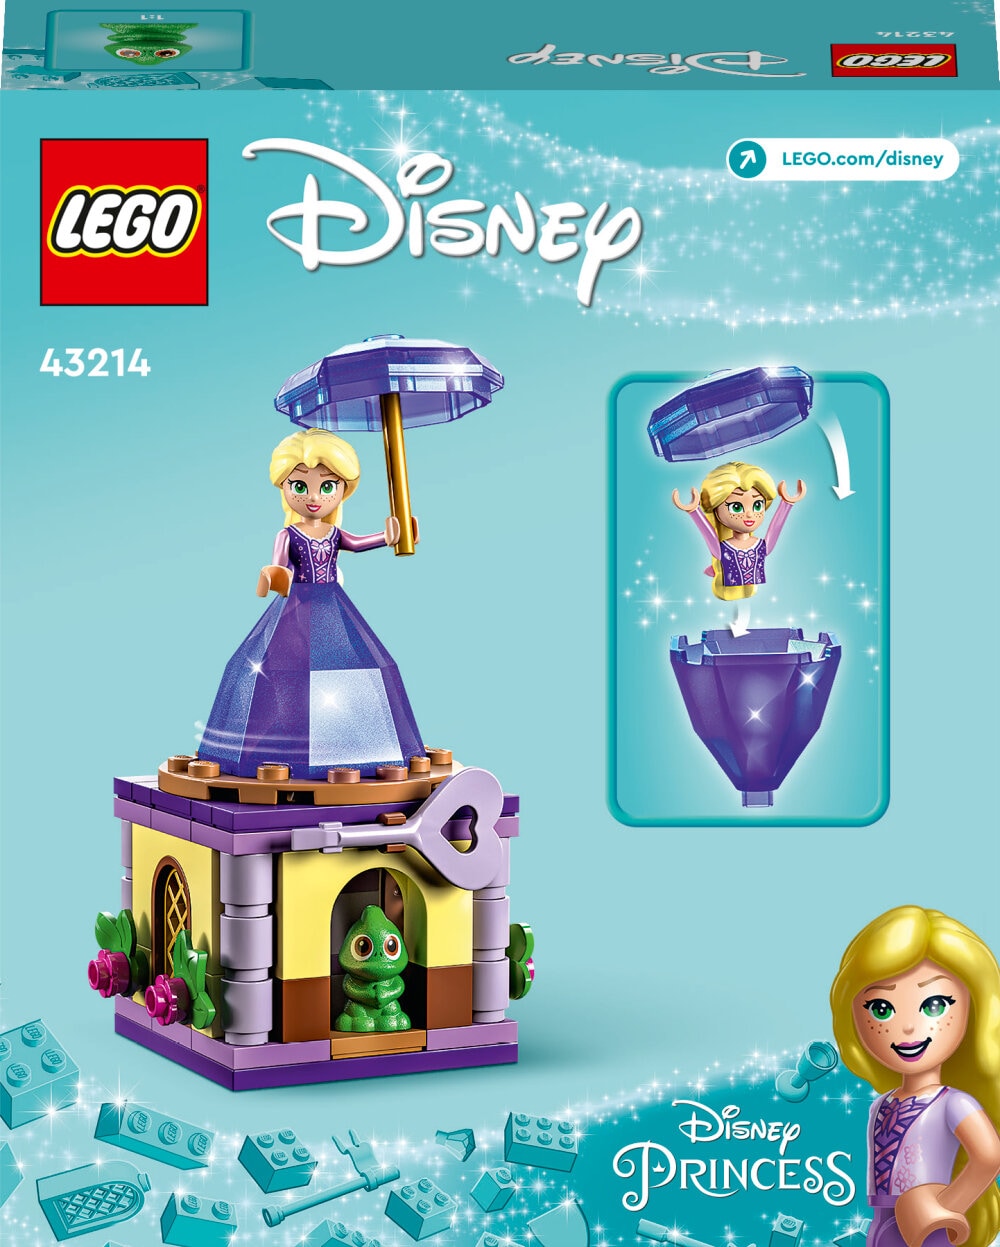 LEGO Disney - Snurrande Rapunzel 5+